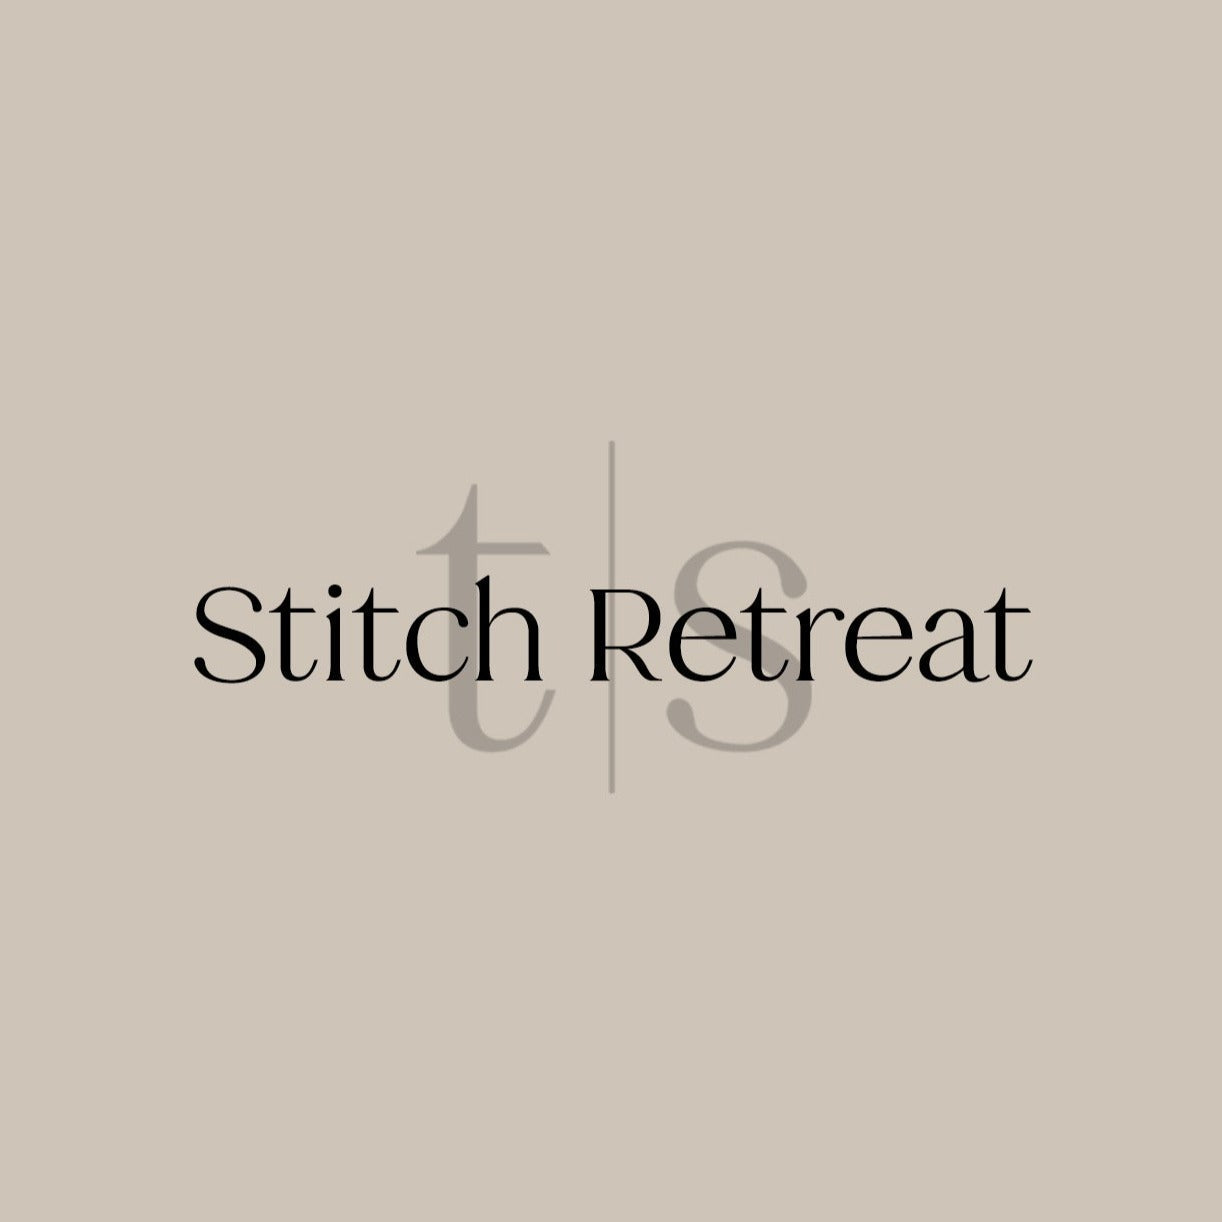 Stitch Retreat | Nov 24 - 25